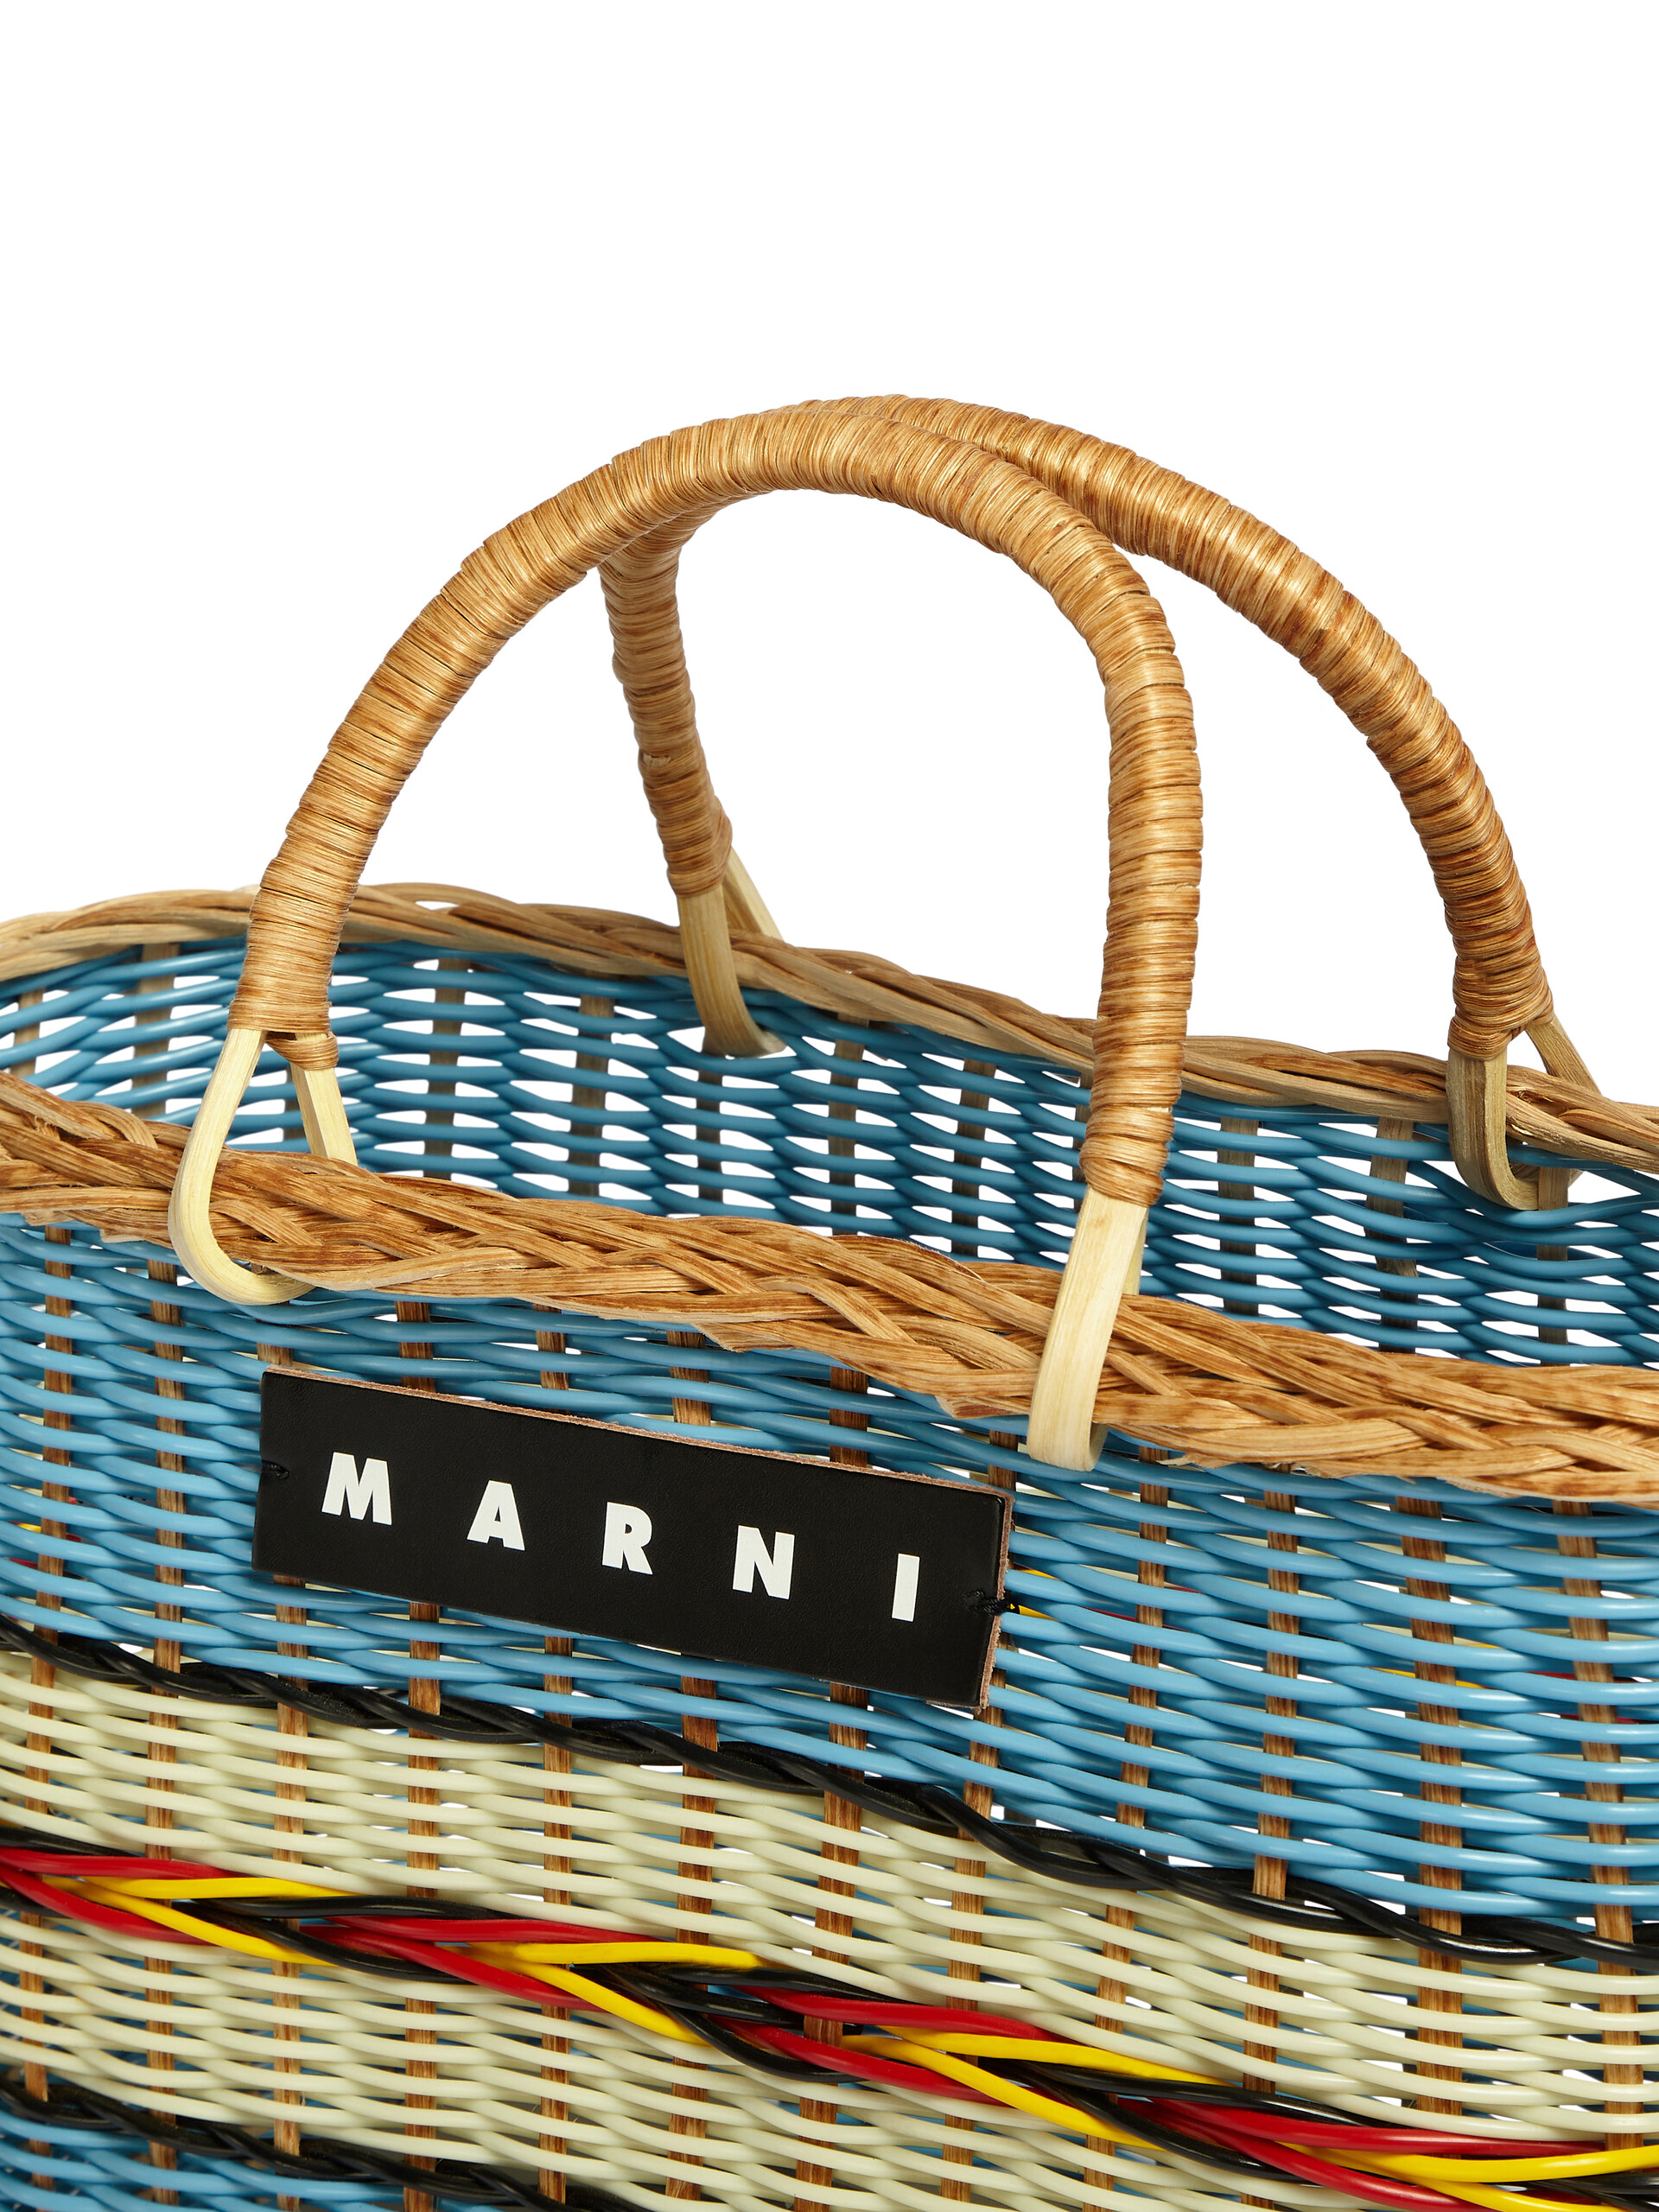 MARNI MARKET bag in multicolor woven material - Bags - Image 4